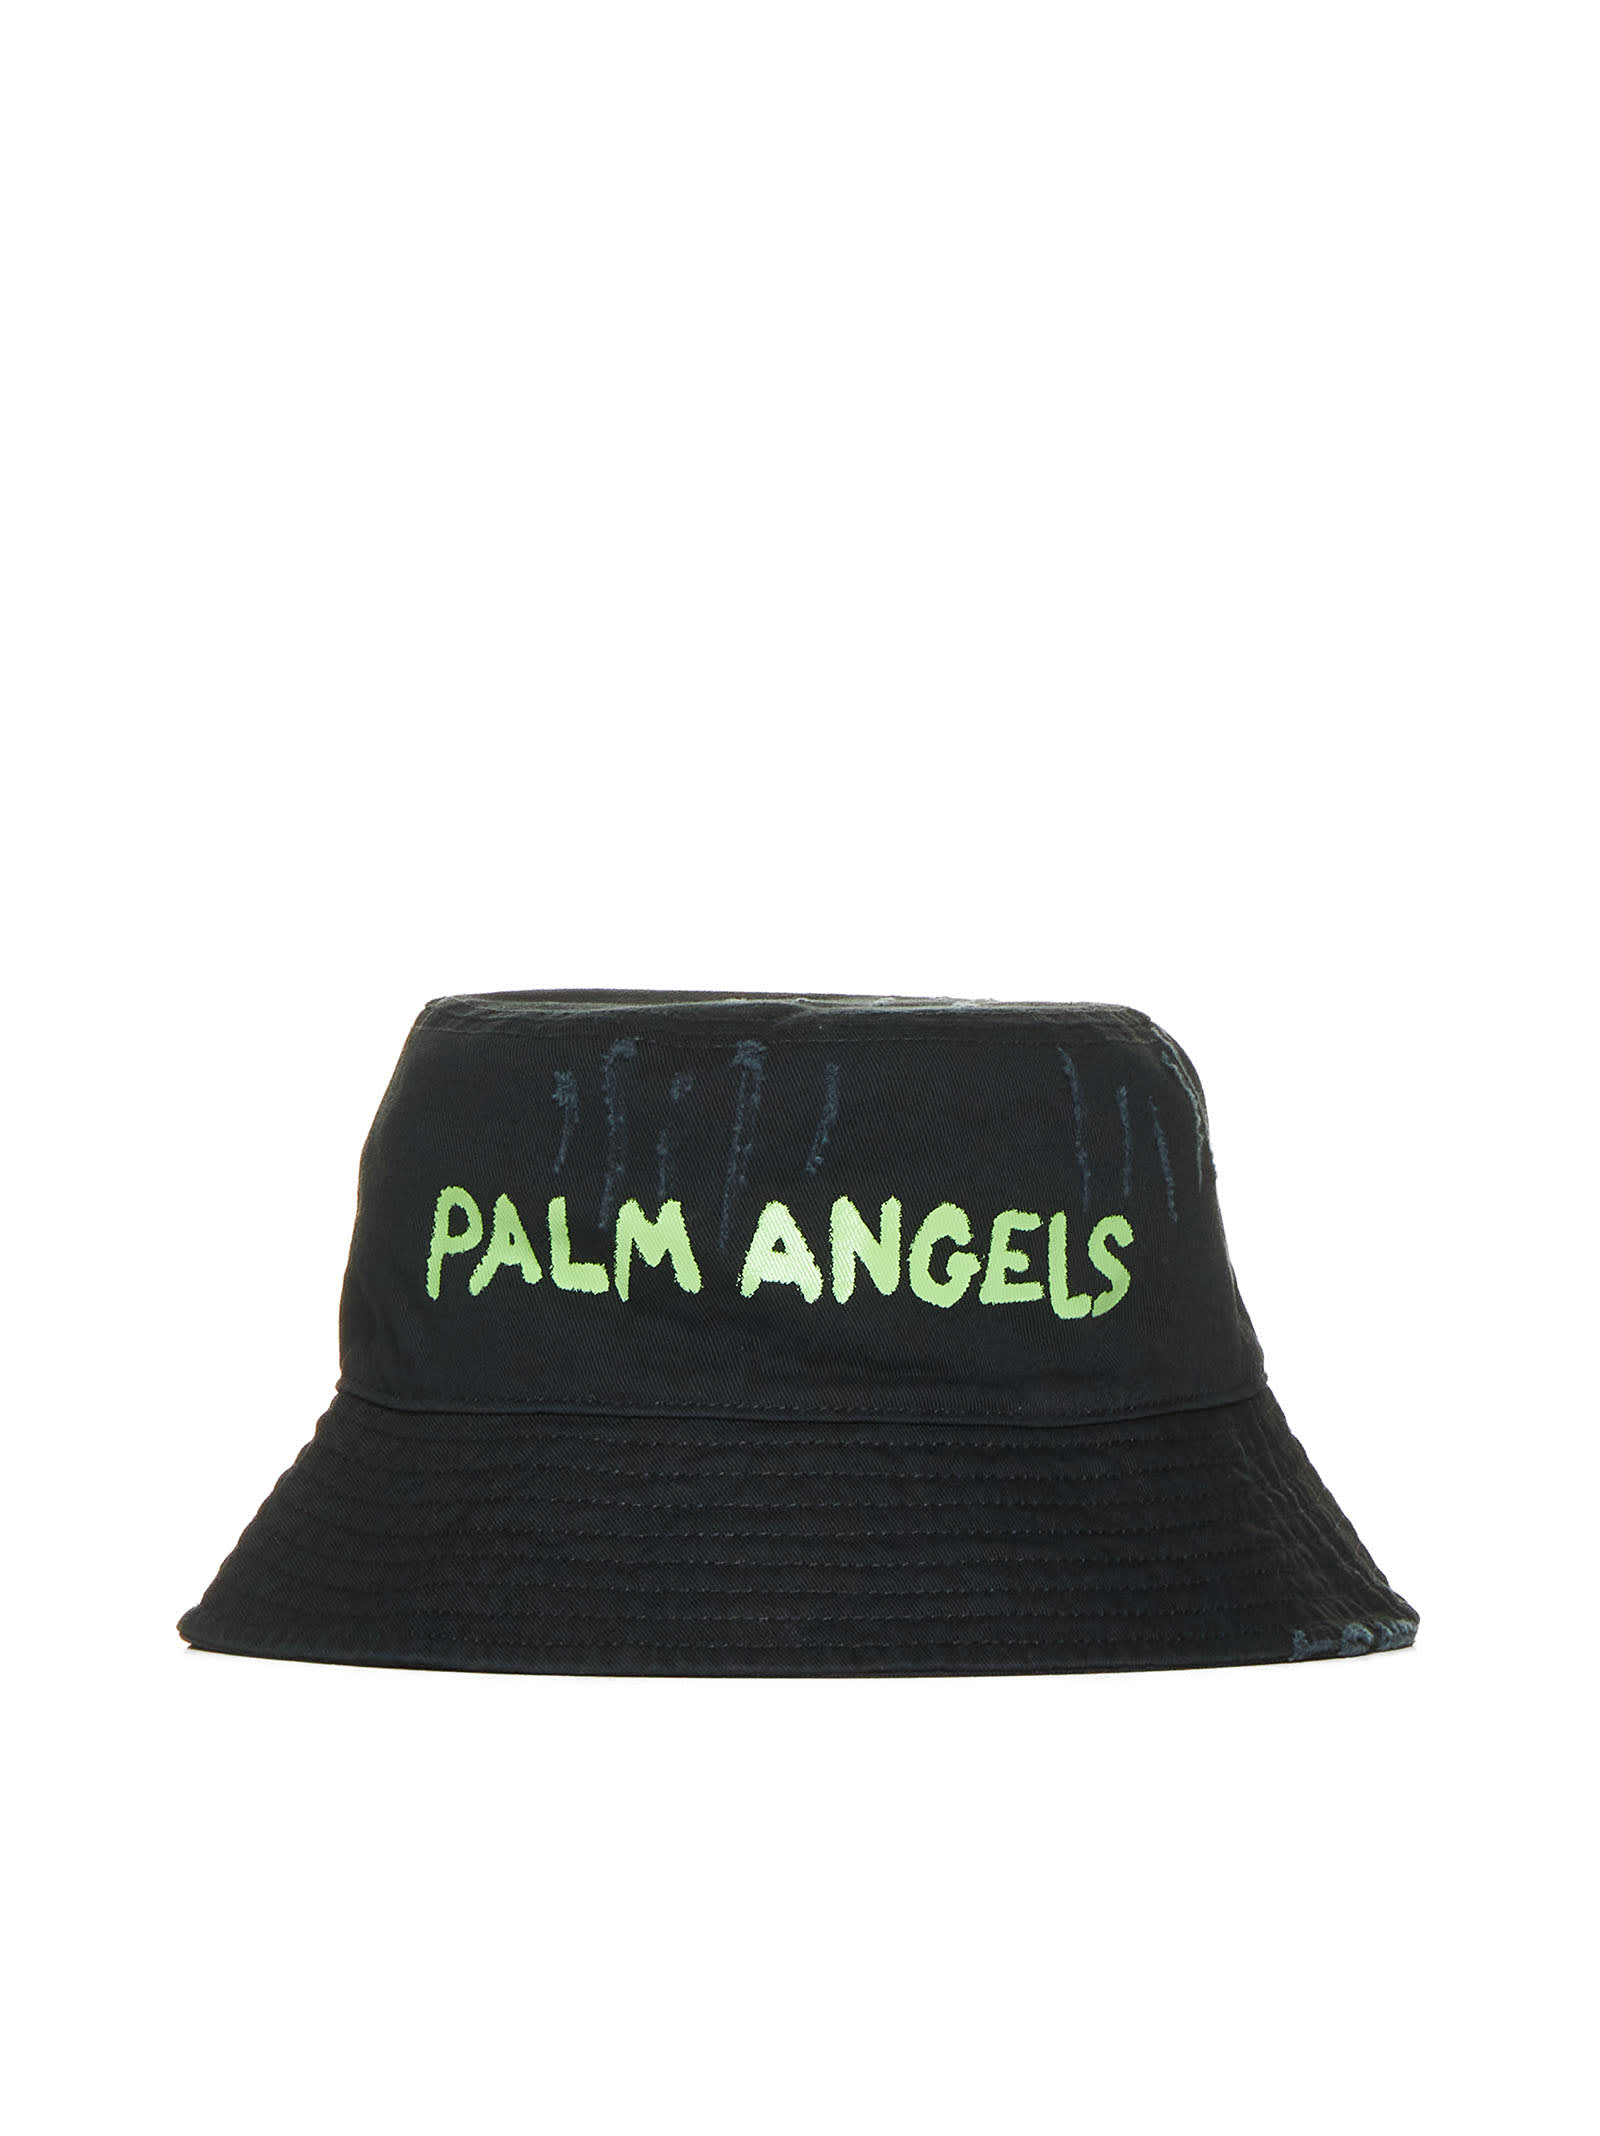 Palm Angels Hat In Black Green Fl